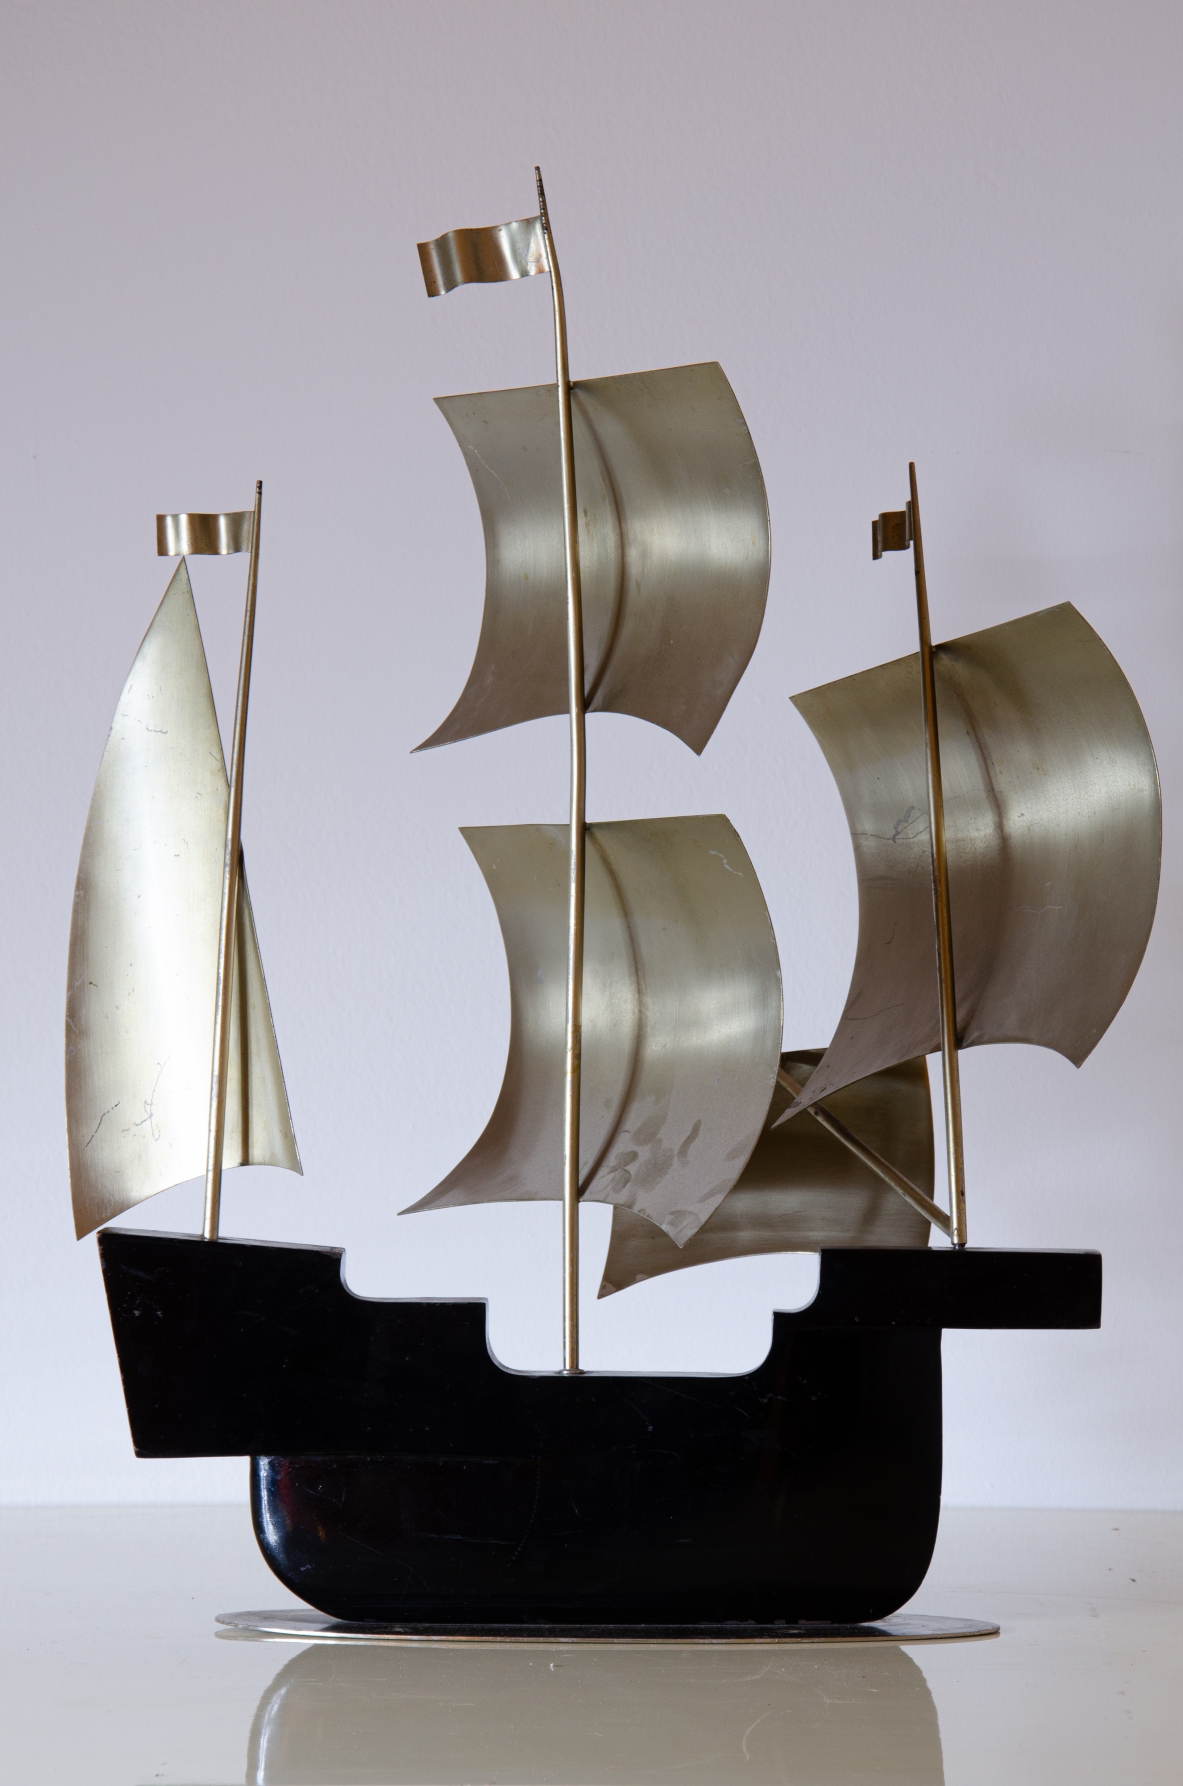 Gio Ponti, splendid 1930's sailing ship in shaped wood.